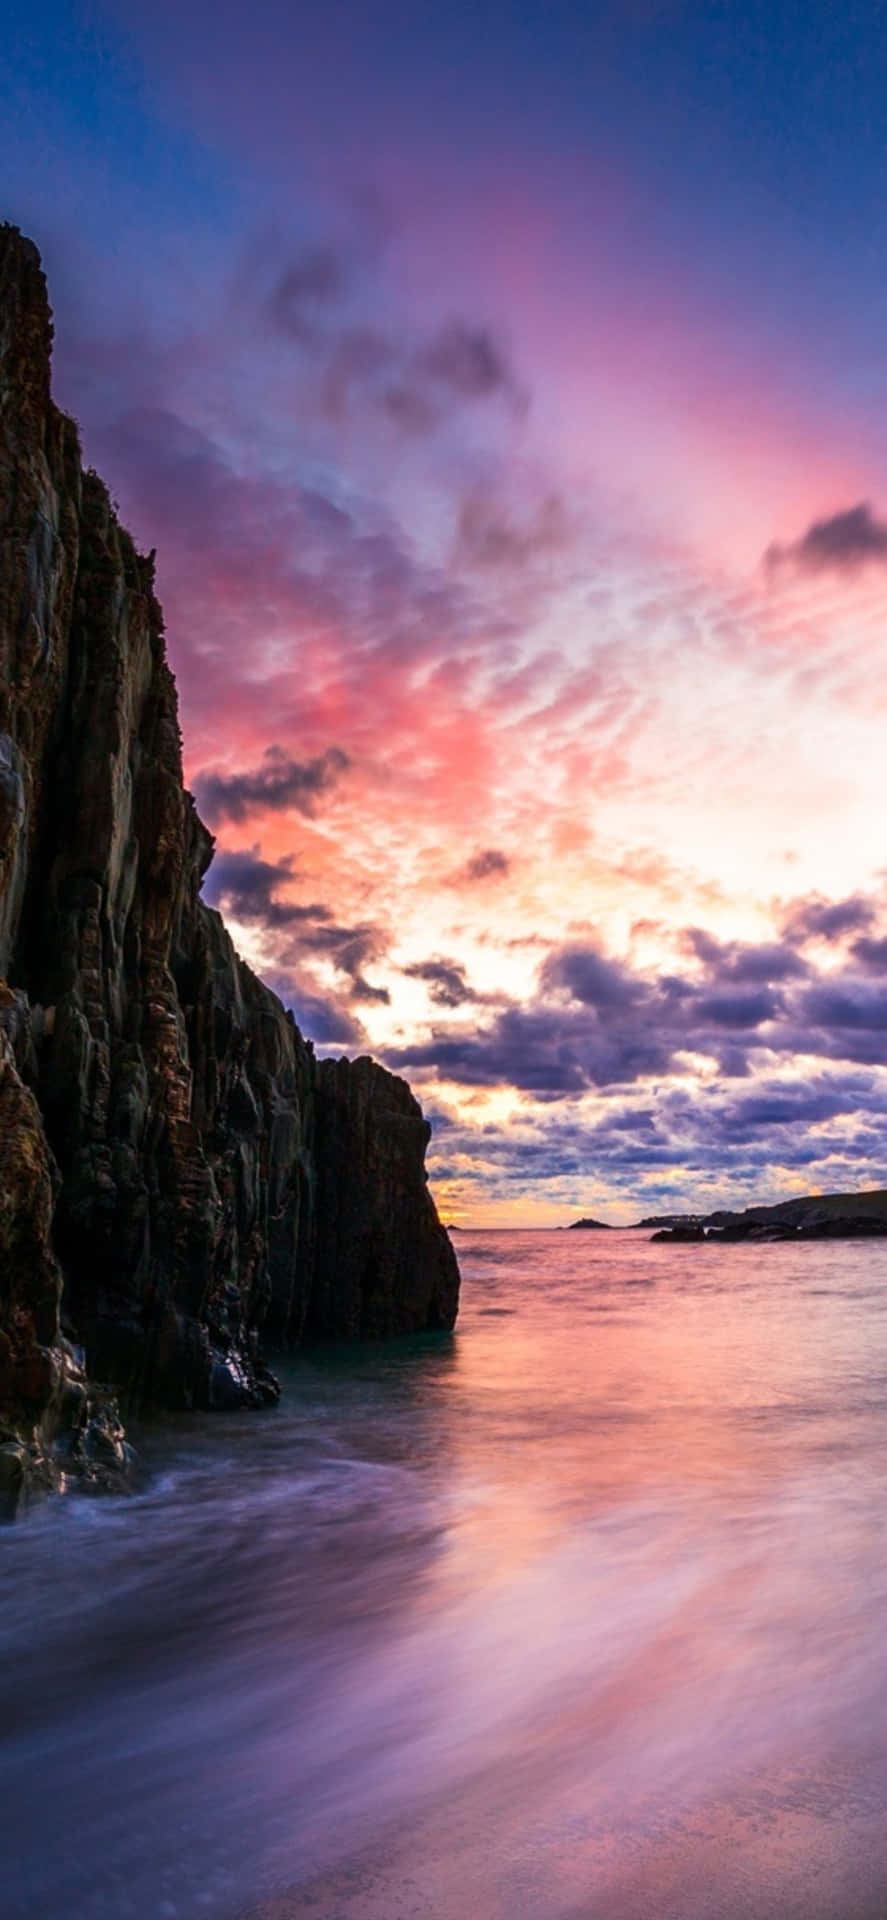 Iphone X Malibu Background Sunset Sky&Cliff